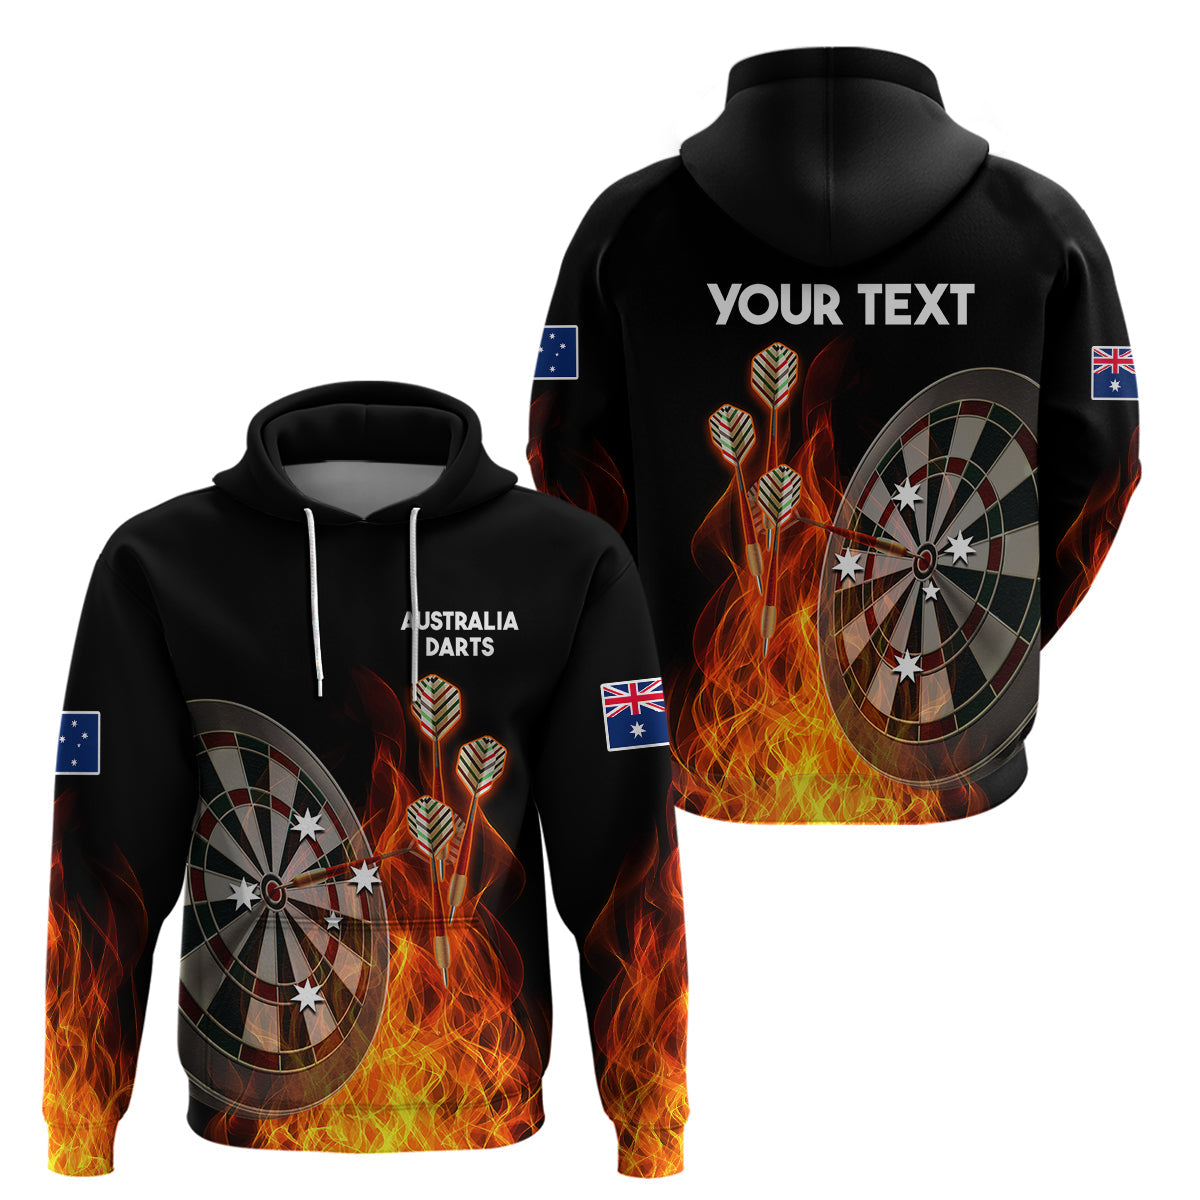 custom-personalised-australia-darts-fire-burning-black-style-hoodie